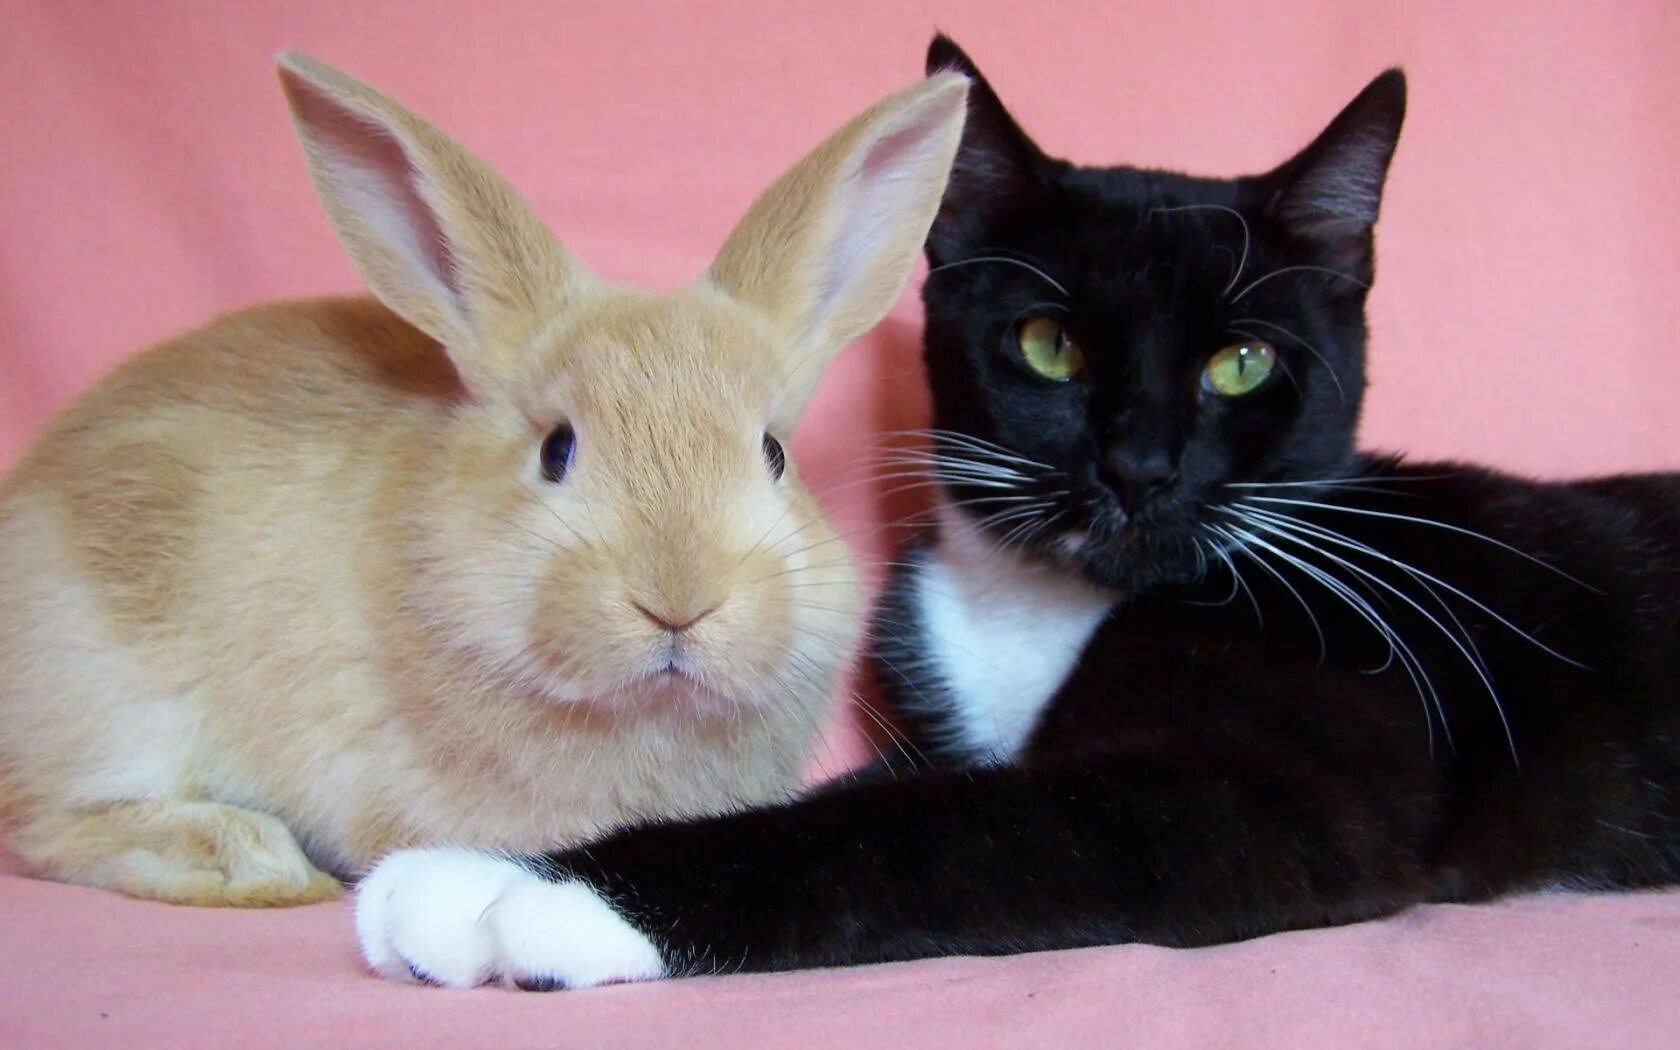 24 год год кролика. Кот и кролик. Кролик и кошка. Кошка Зайка. Гибрид кота и кролика.